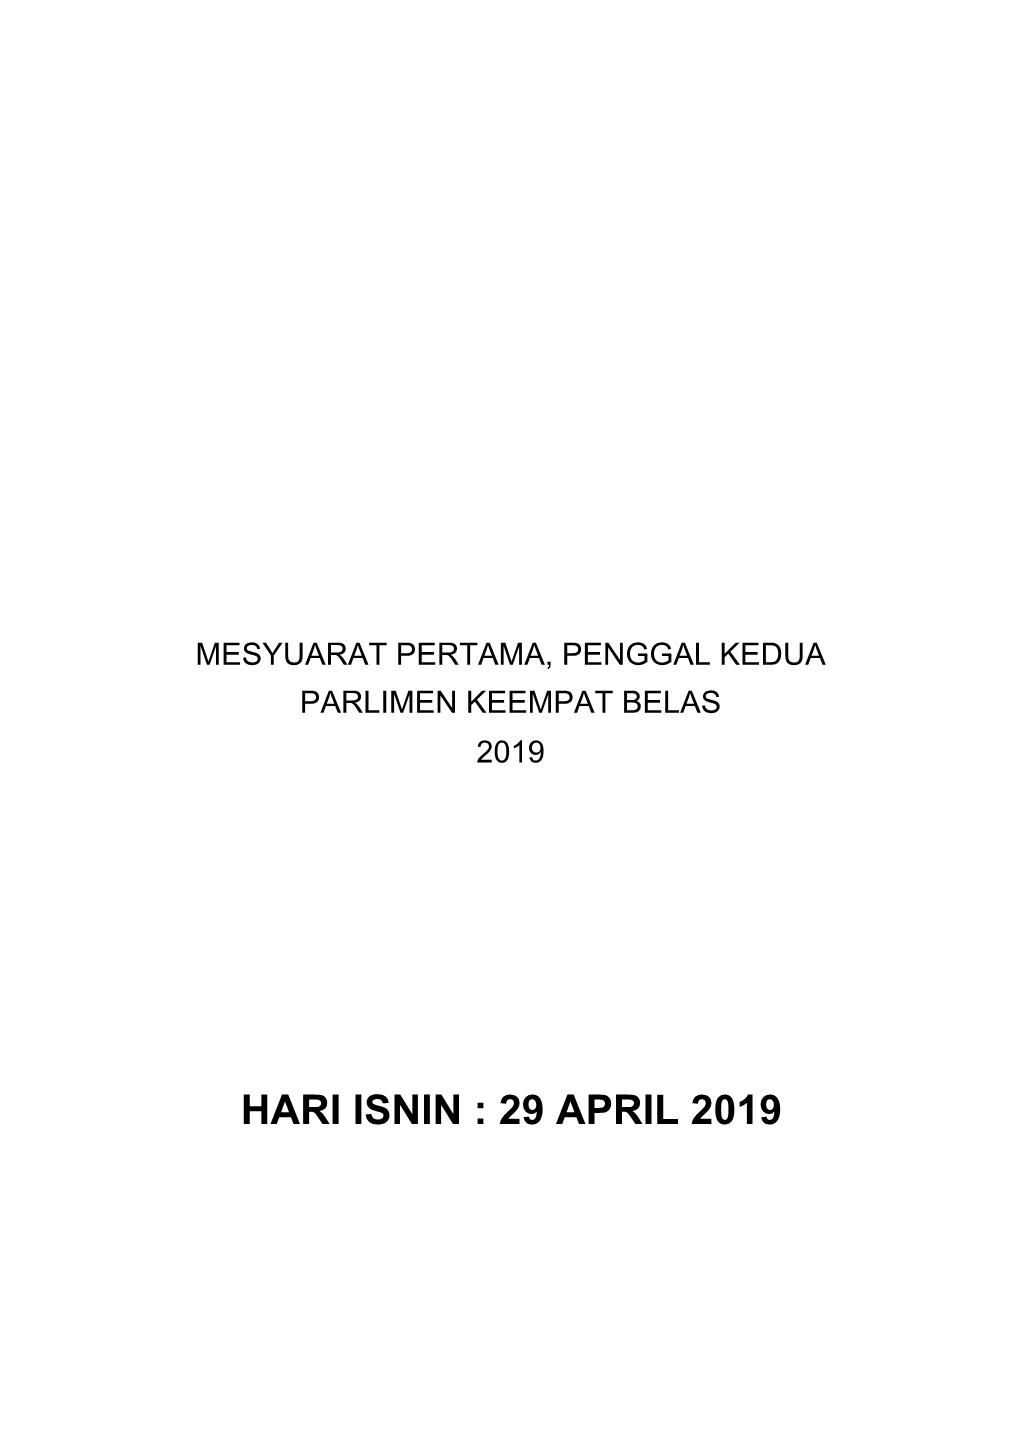 Hari Isnin : 29 April 2019